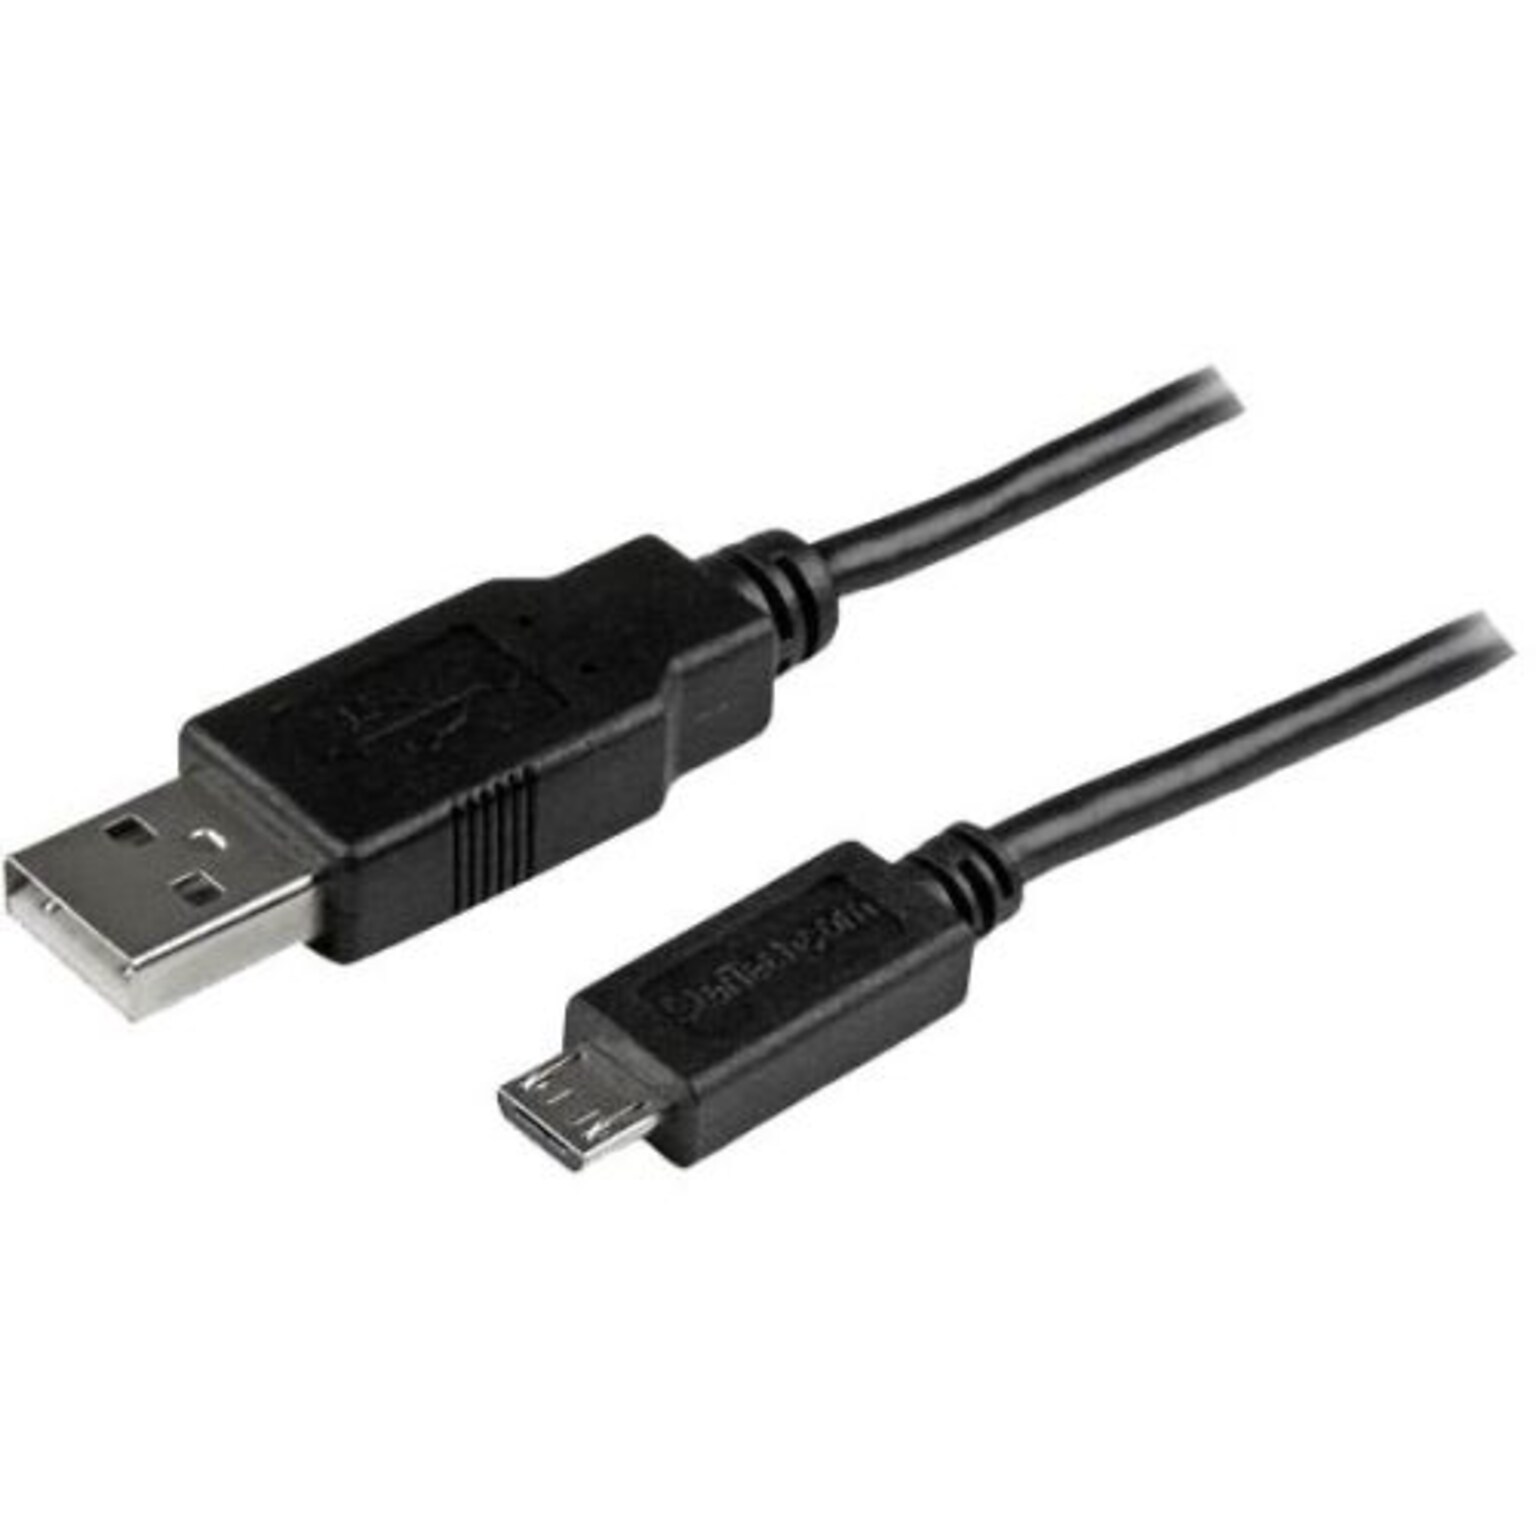 Startech 6 USB 2.0 4-Pin/Micro USB 2.0 5-Pin Data Transfer Cable